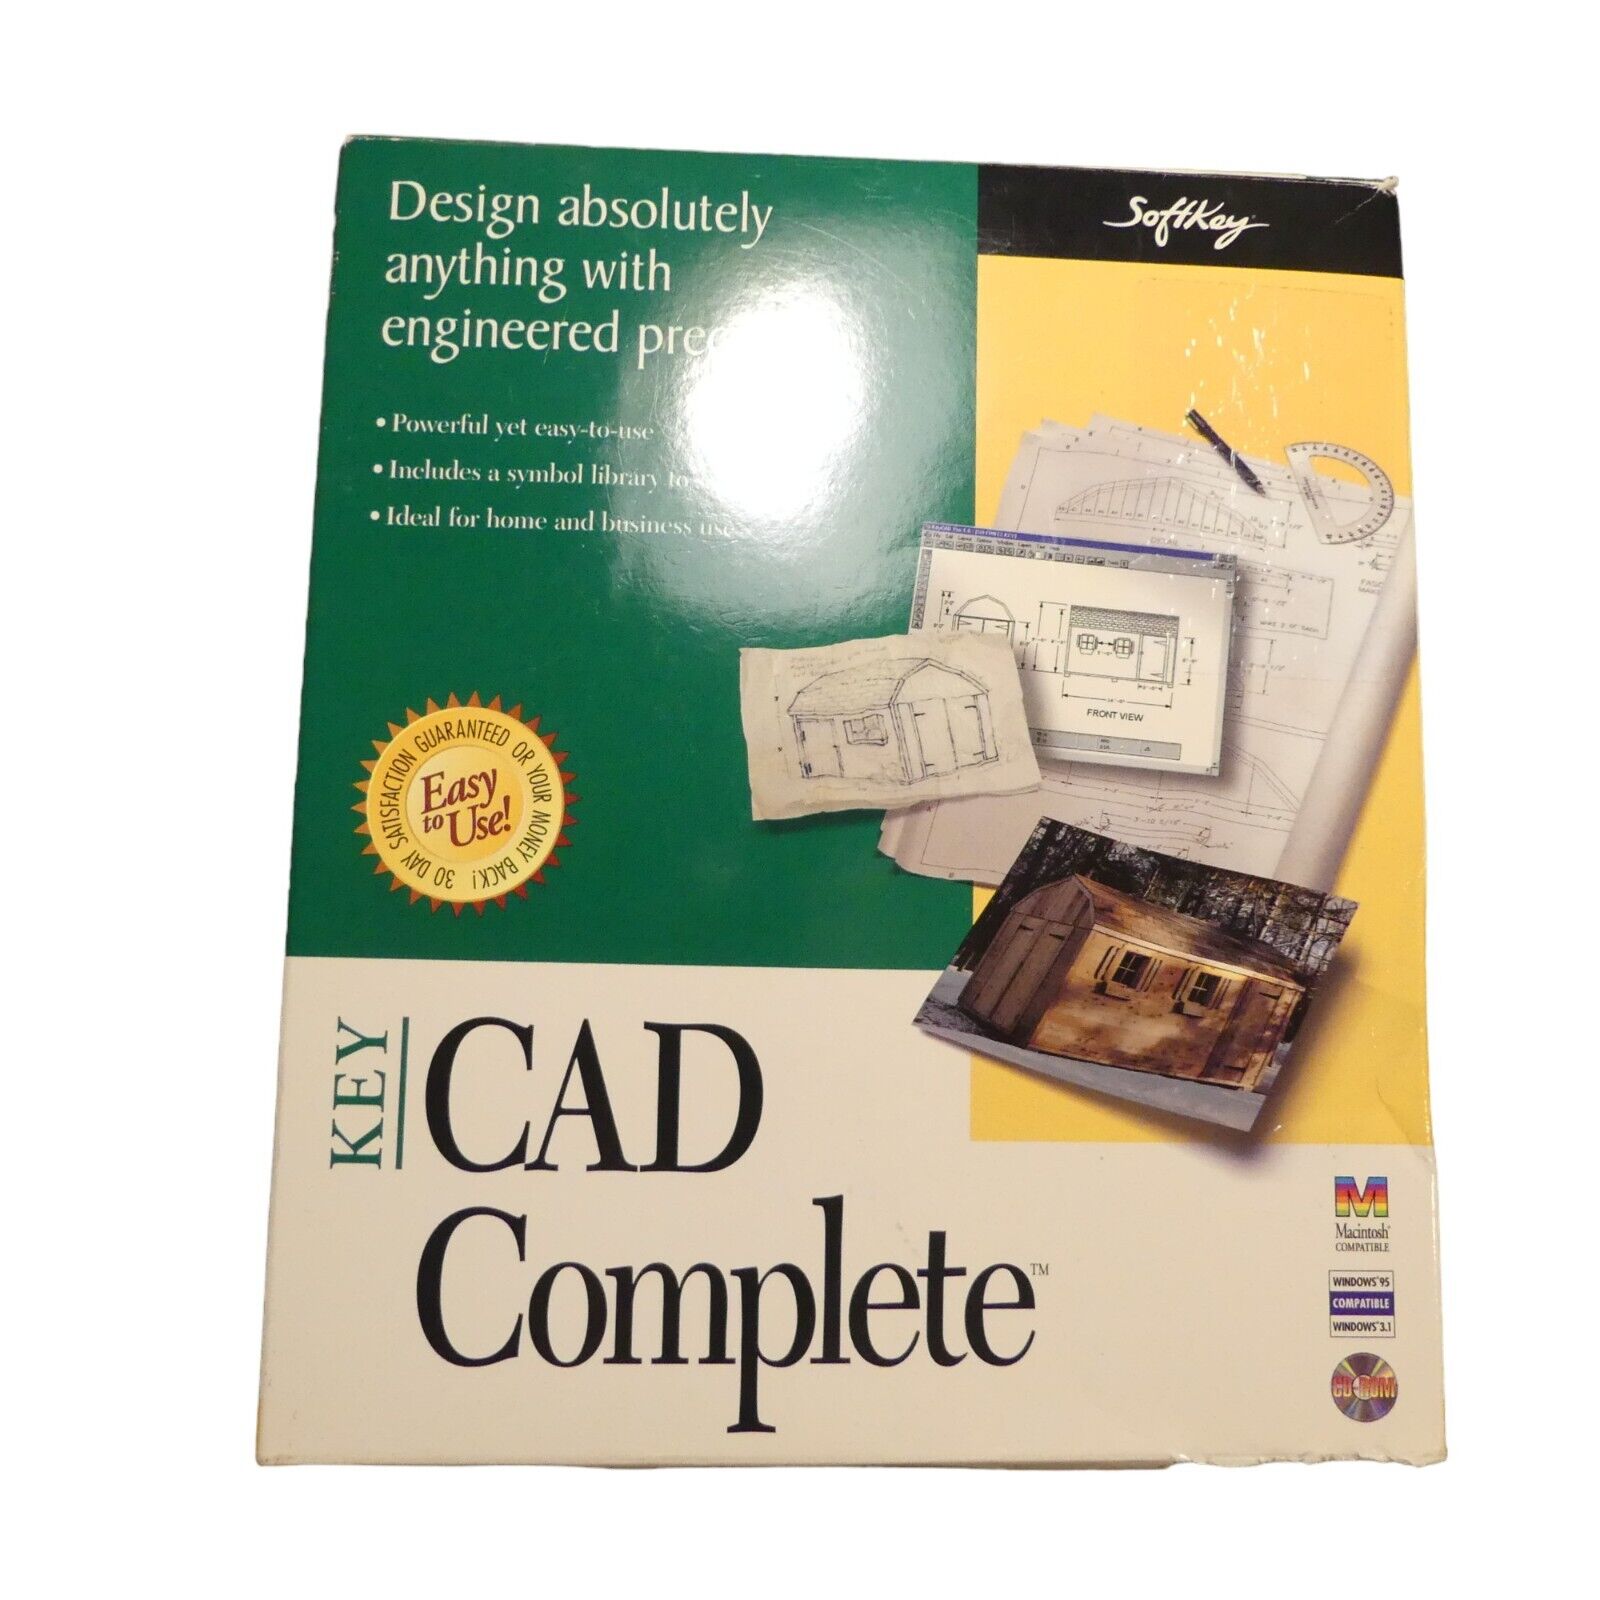 Softkey Key CAD Complete PC CD McIntosh Windows Vintage 1997 Co